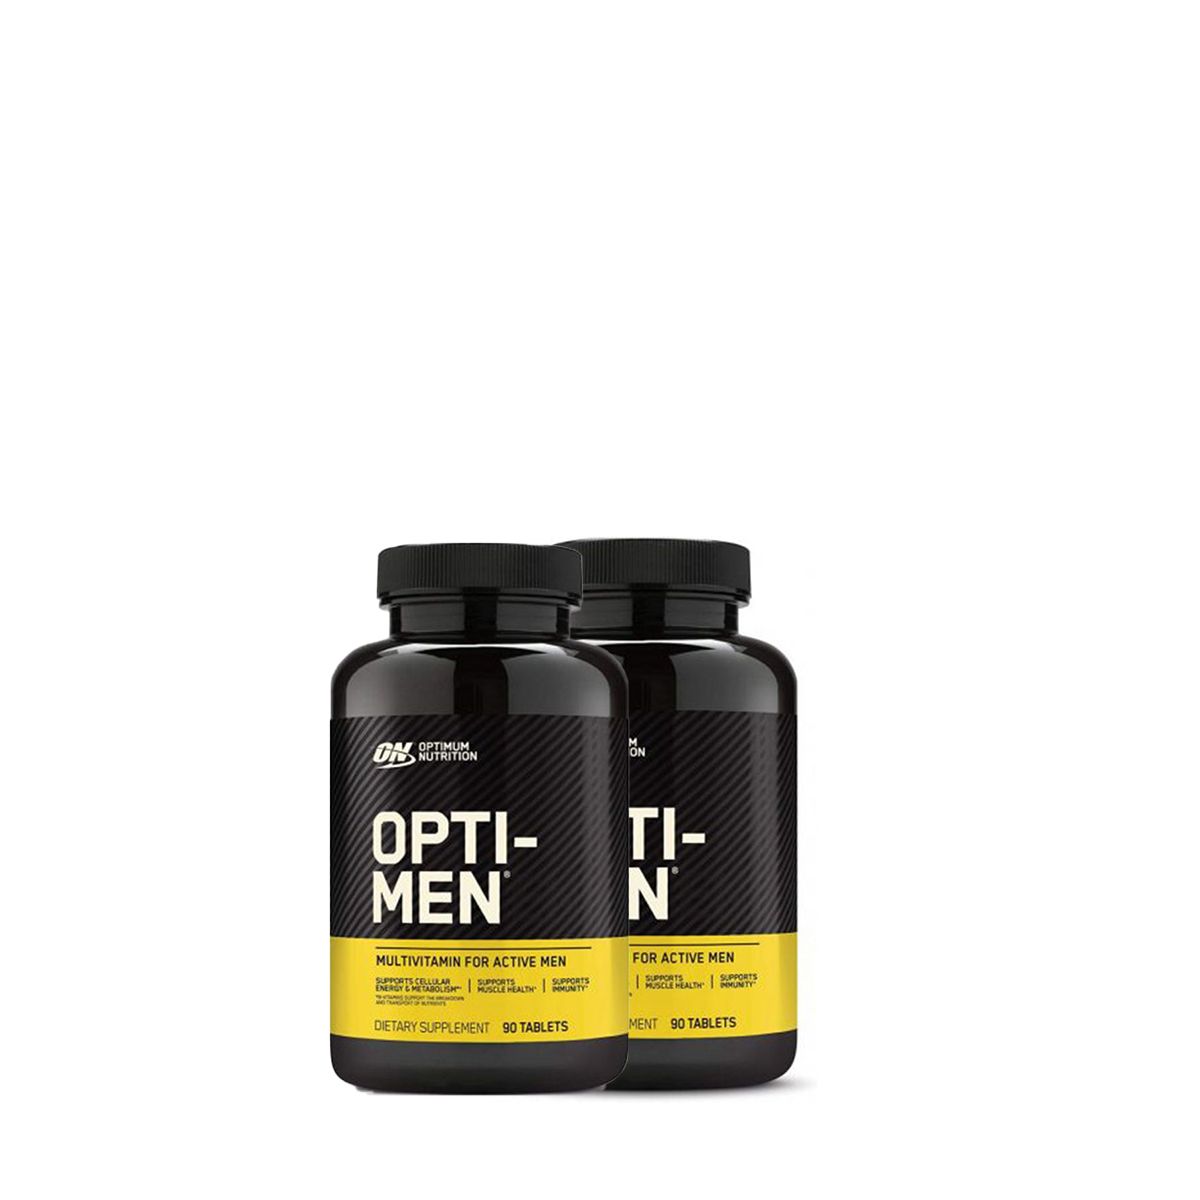 OPTIMUM NUTRITION - OPTI-MEN - 2 X 90 TABLETTA (OPTIMEN)